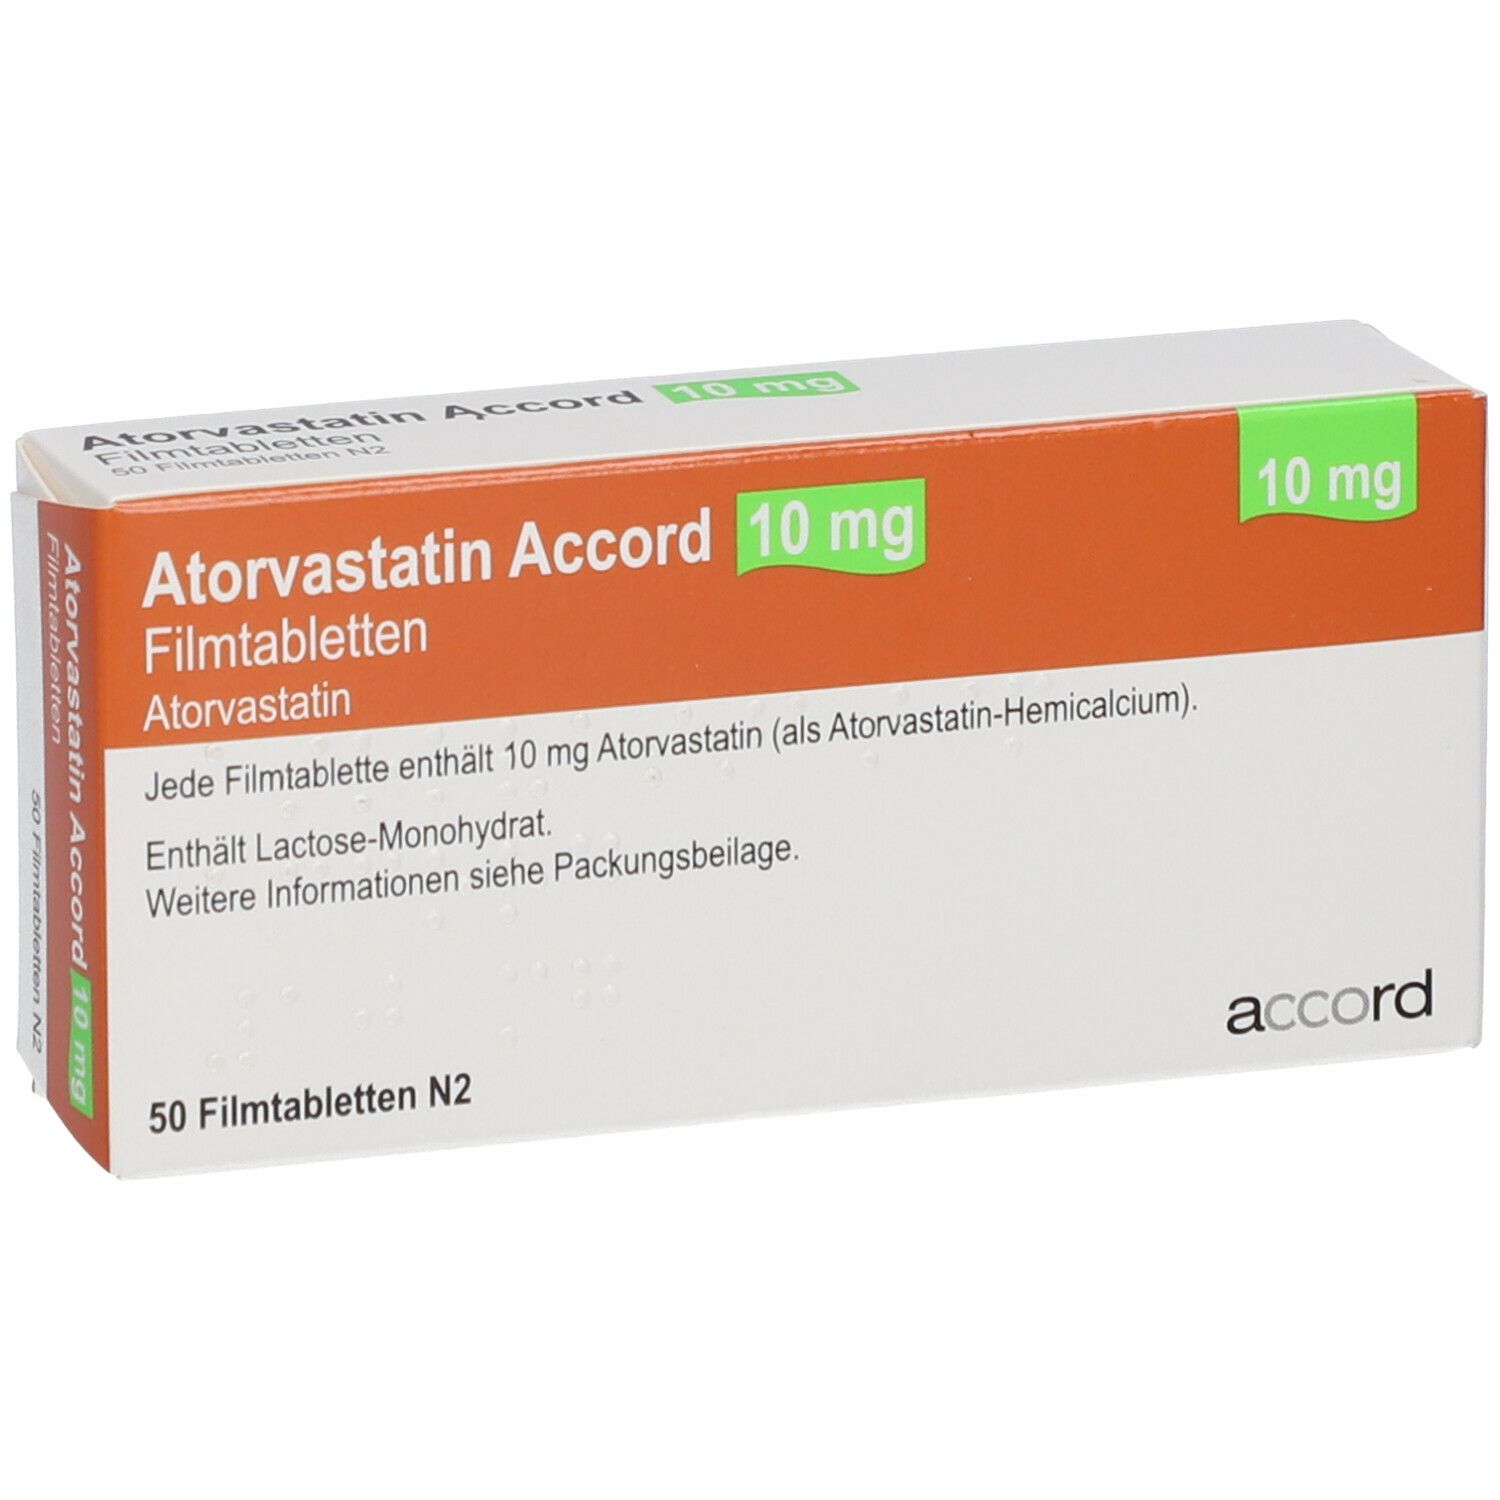 Atorvastatin Accord 10 mg